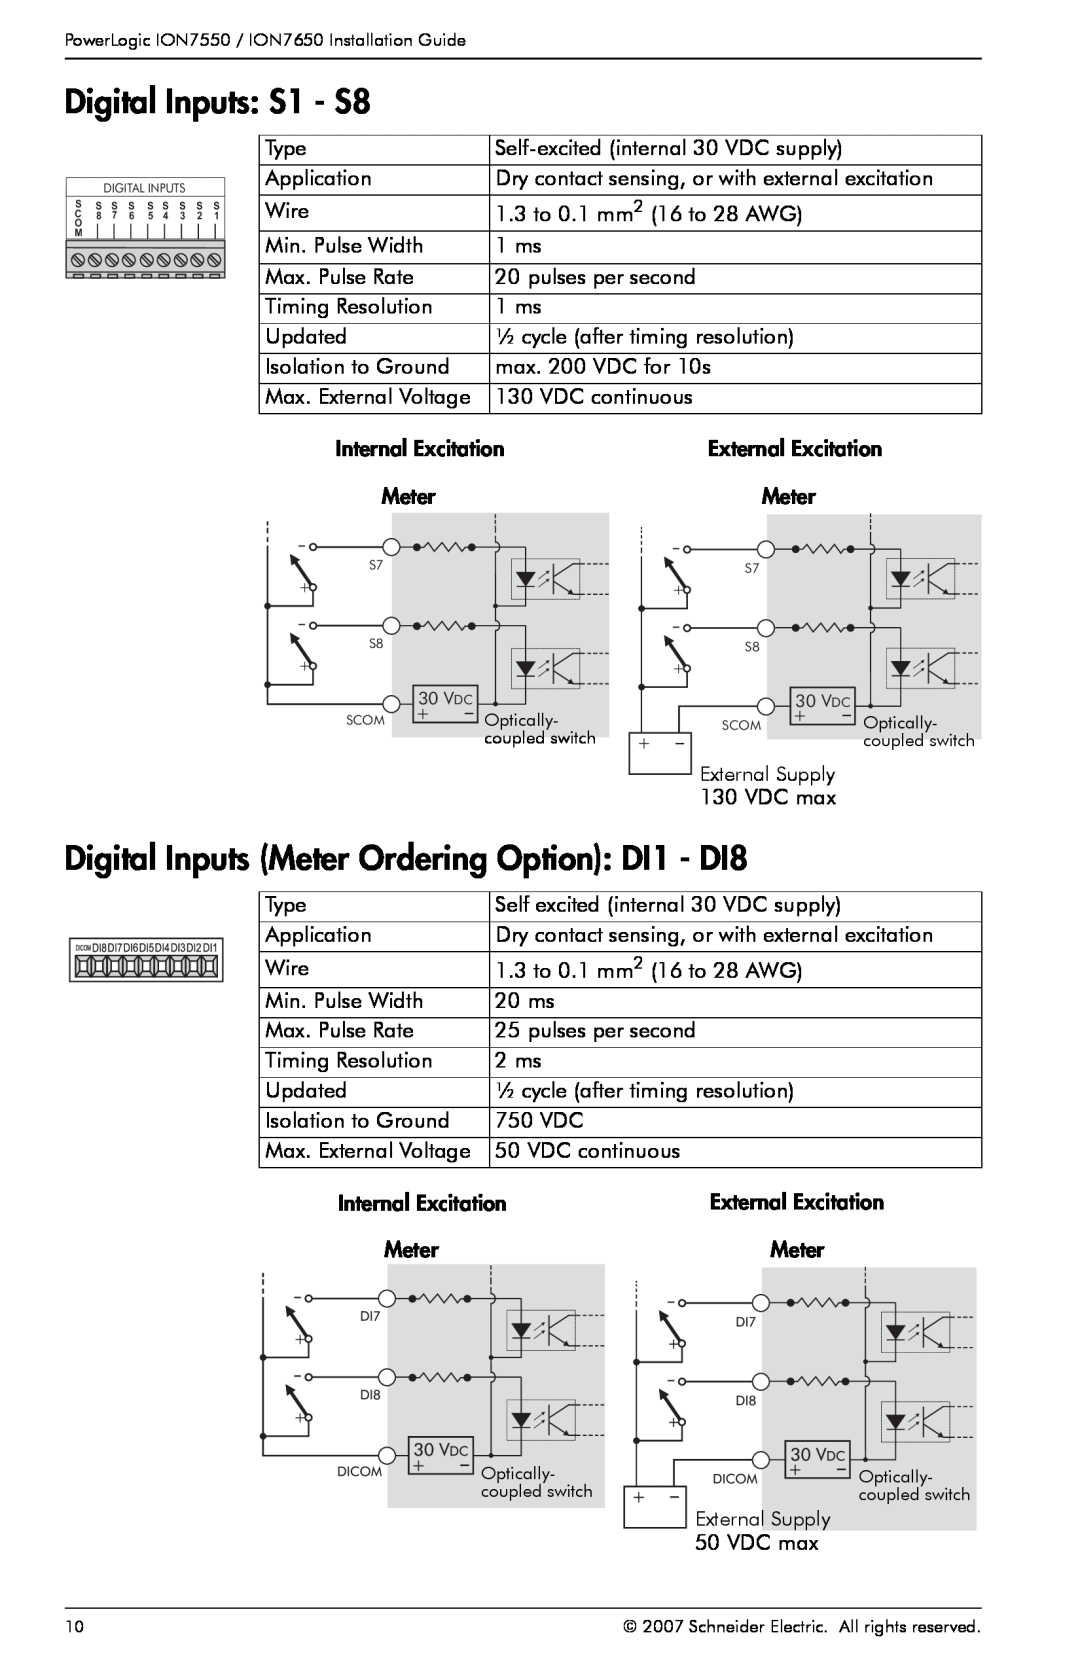 Schneider Electric ION7650 Digital Inputs S1 - S8, Digital Inputs Meter Ordering Option DI1 - DI8, 30 VDC, Scom + 